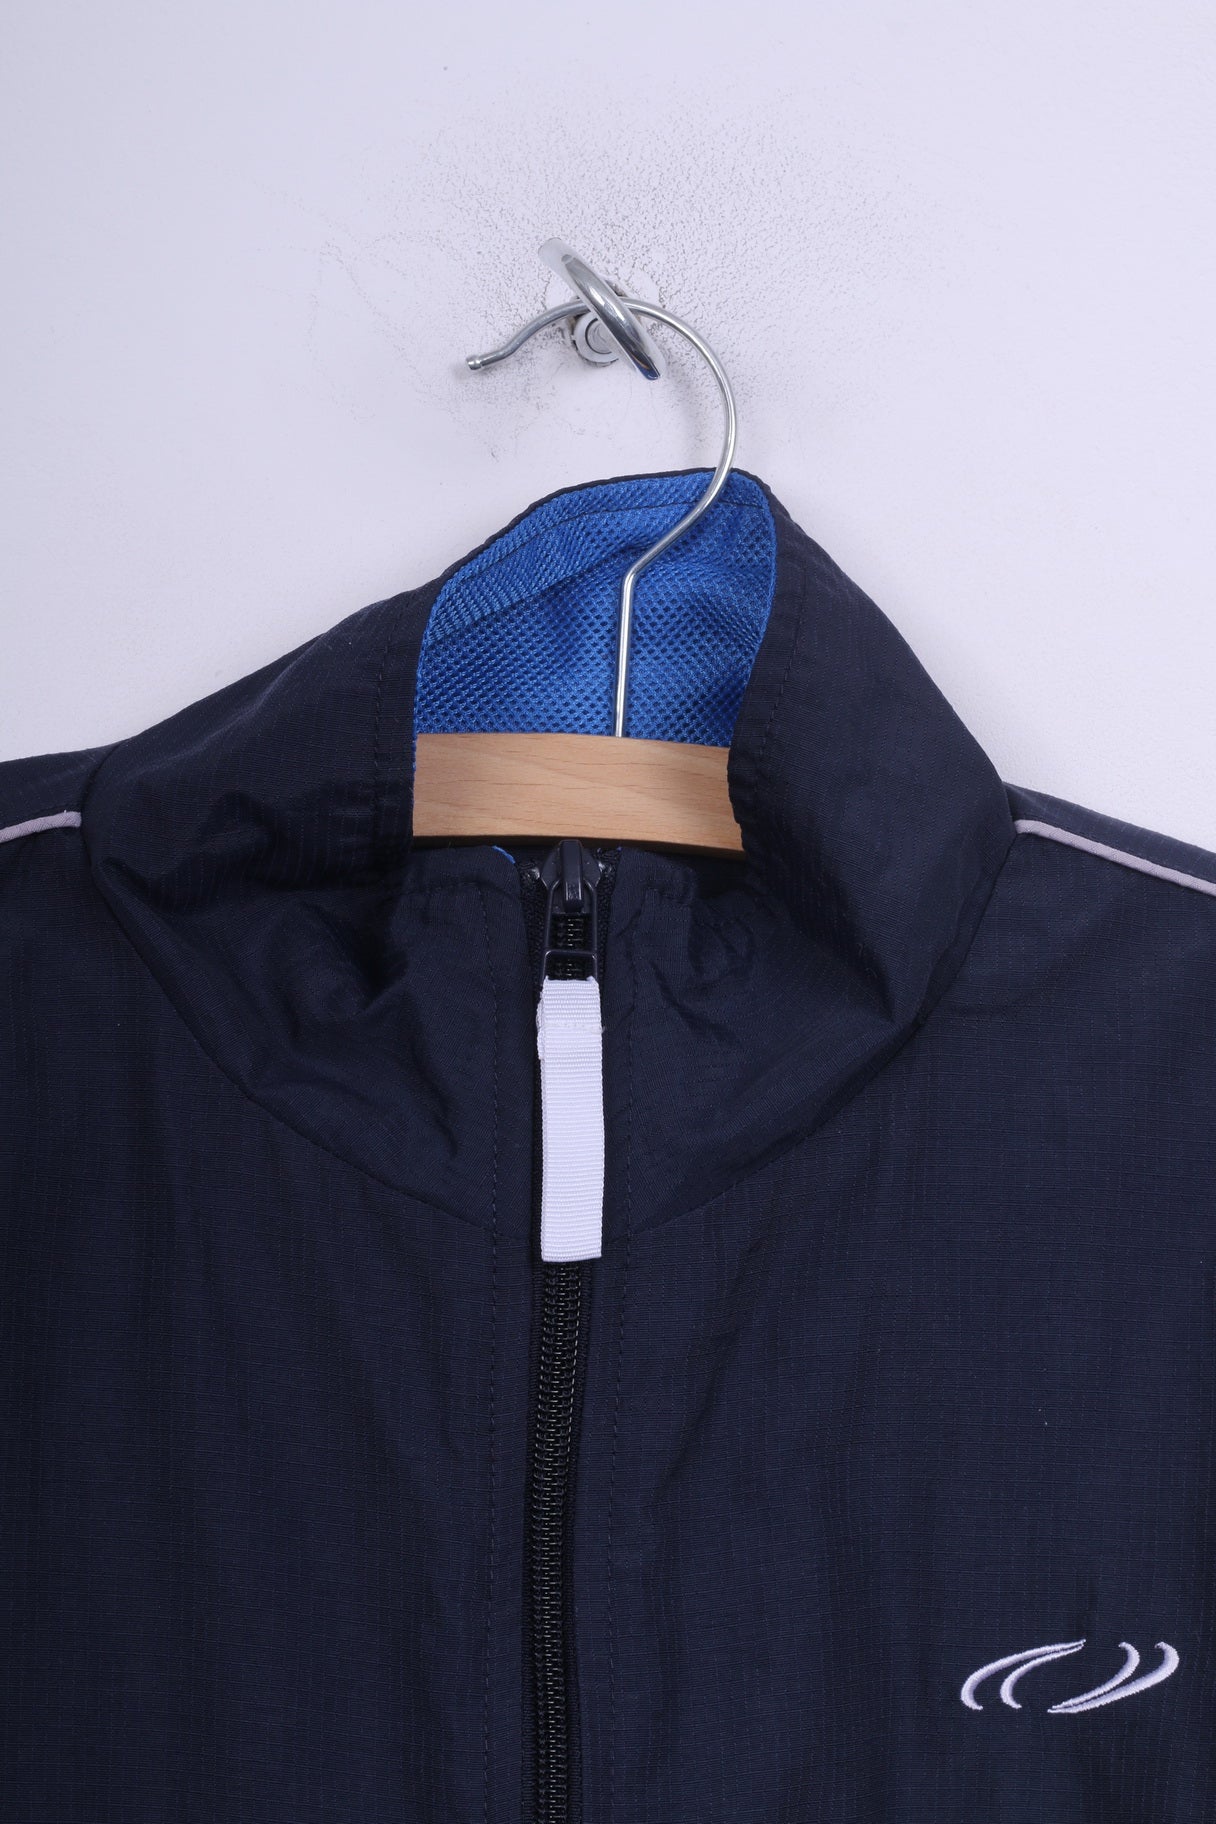 U.S.Athletic Boys 12/13 Yrs Jacket Full Zipper Navy Nylon Waterproof